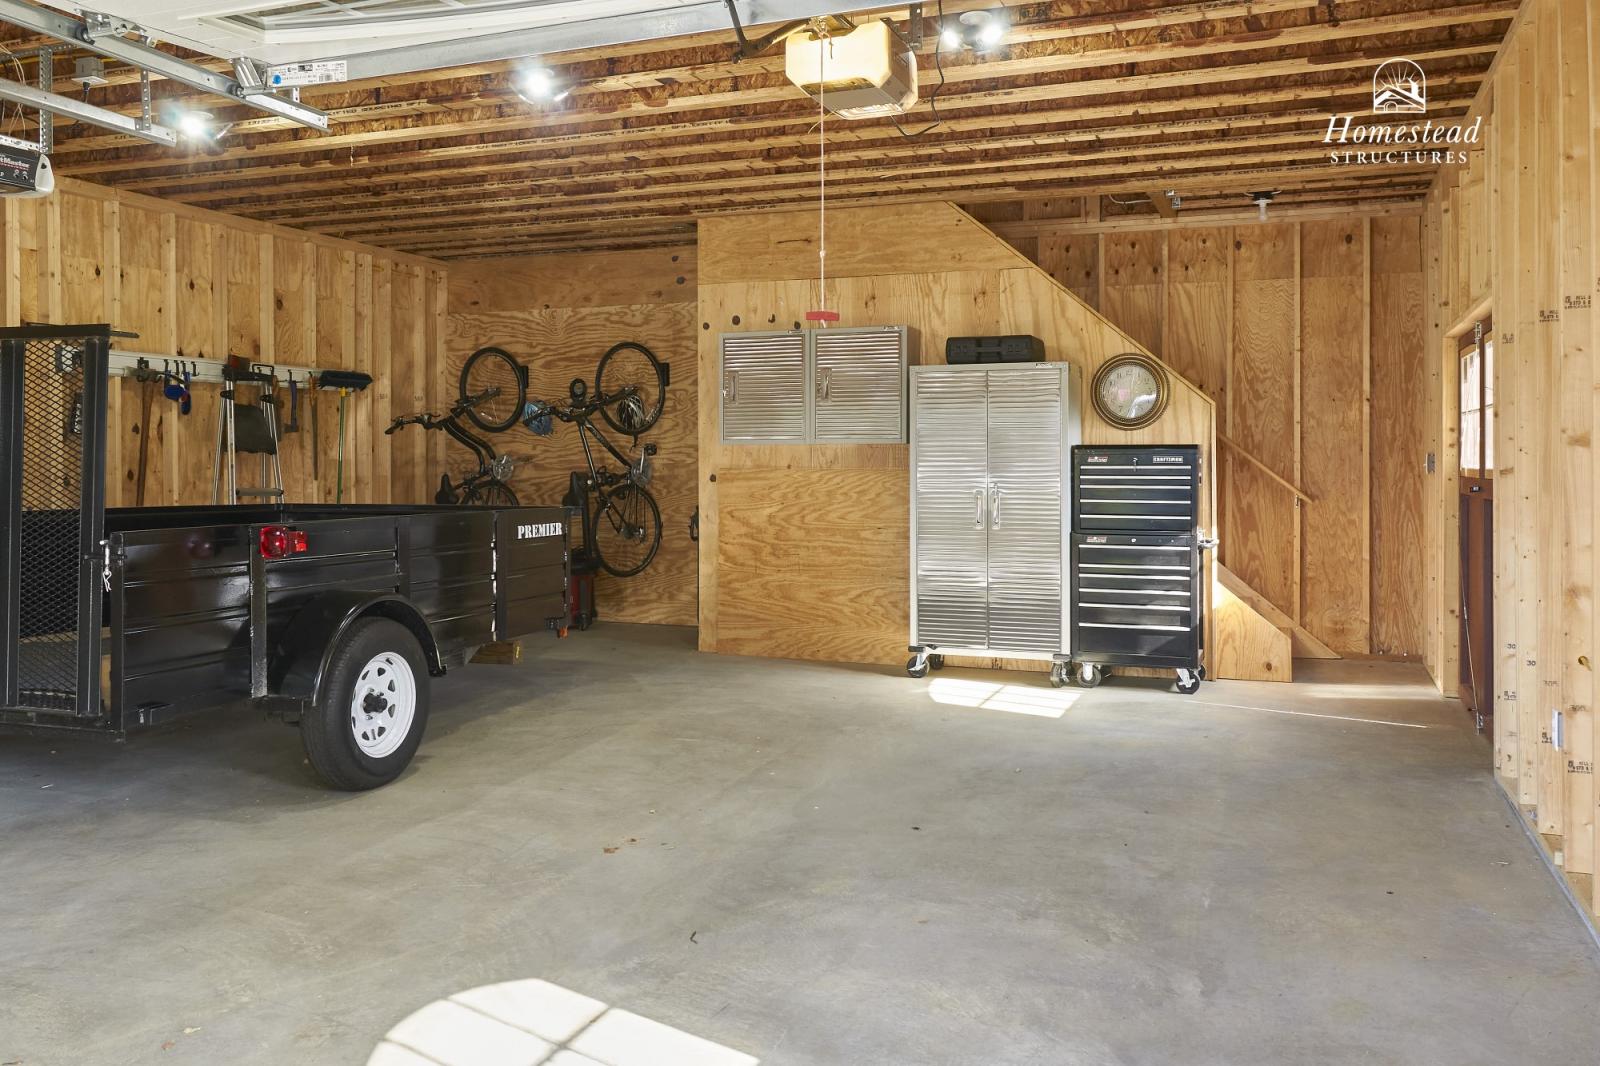 Hollis Garage - Middletown MD | Homestead Structures